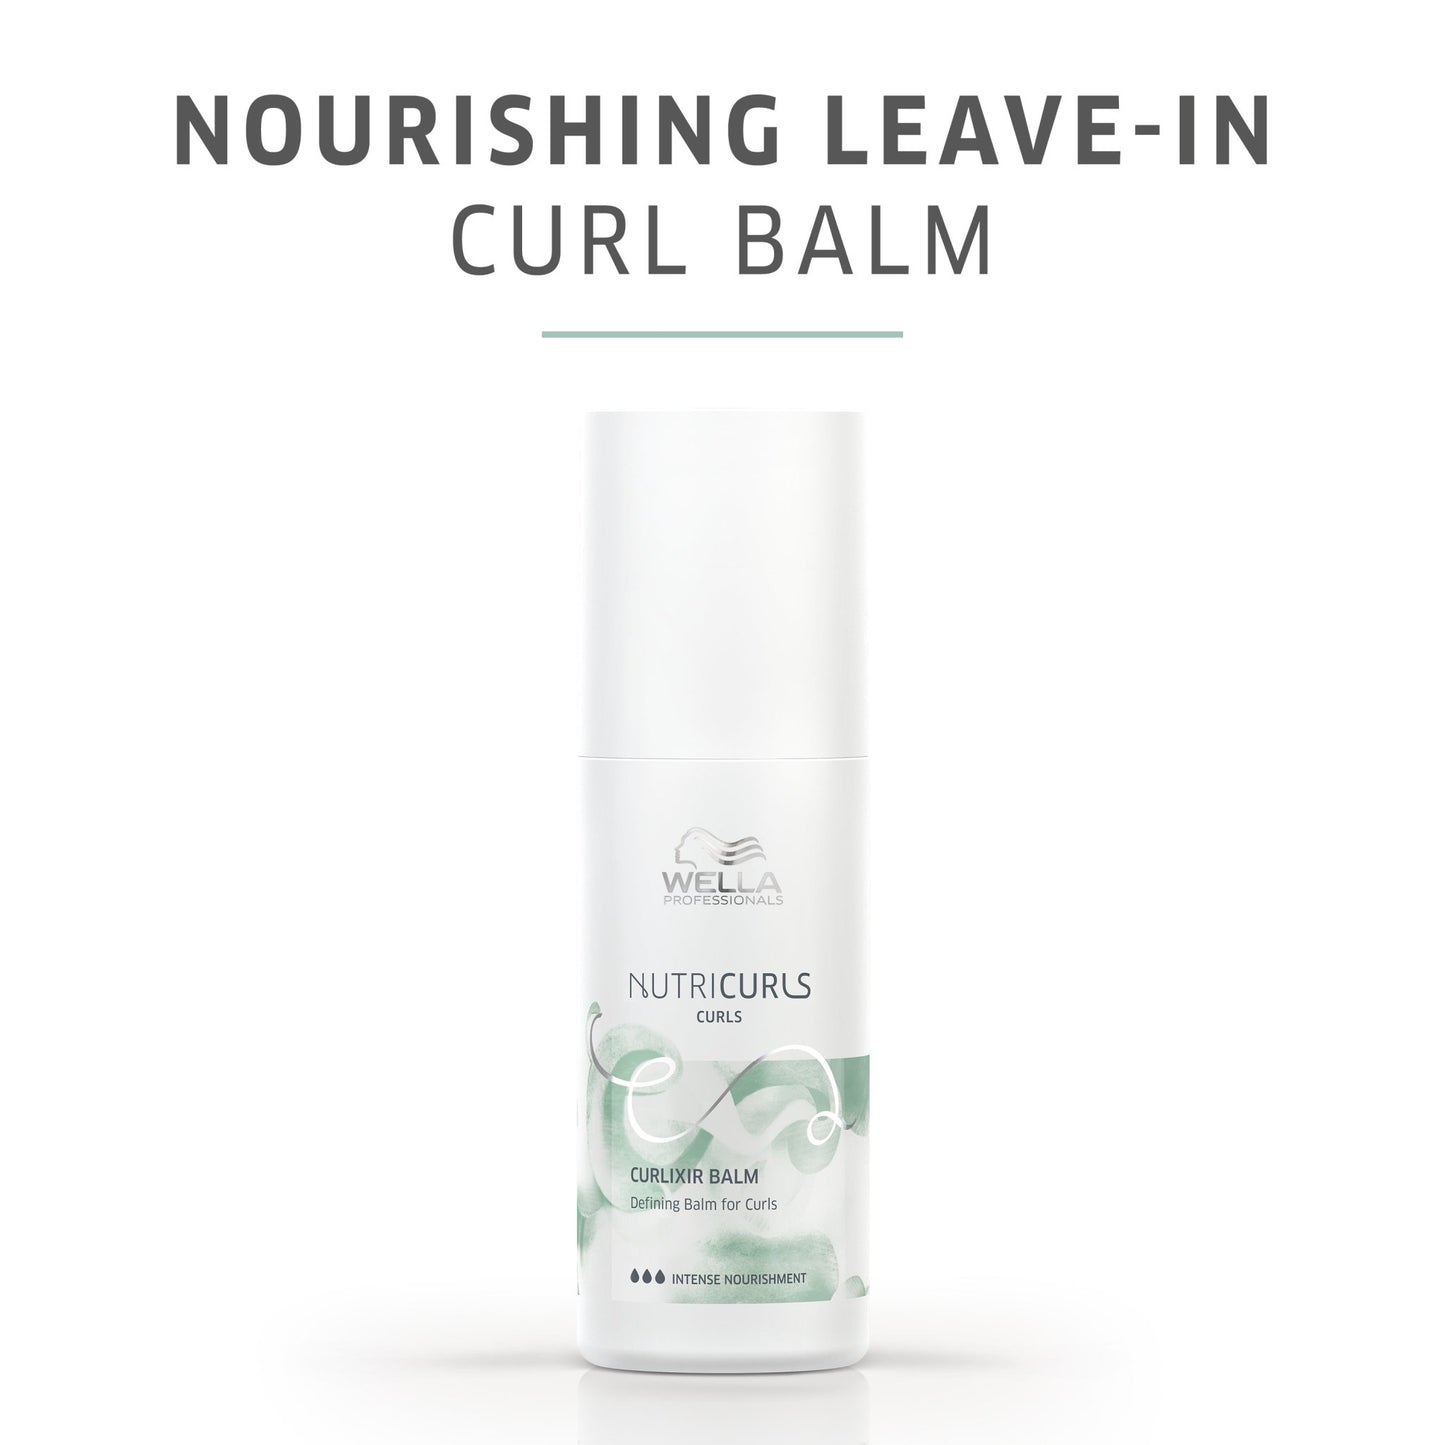 Curlixir Balm Defining Balm for Curls | NUTRICURLS | WELLA - SH Salons